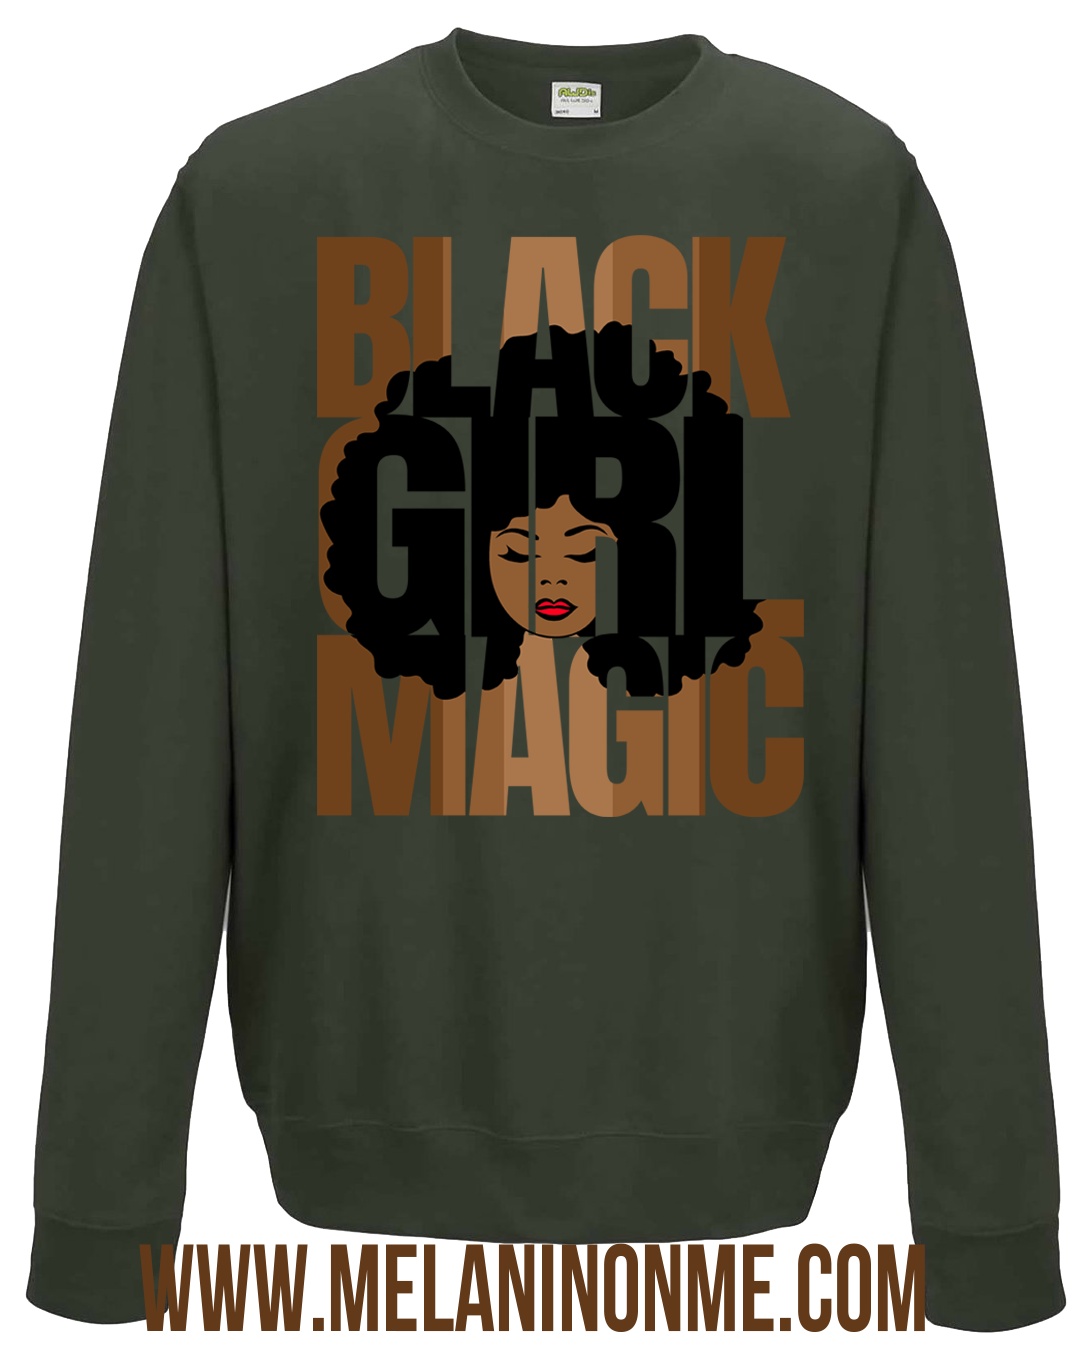 Black Girl Magic Limited Edition Sweatshirt